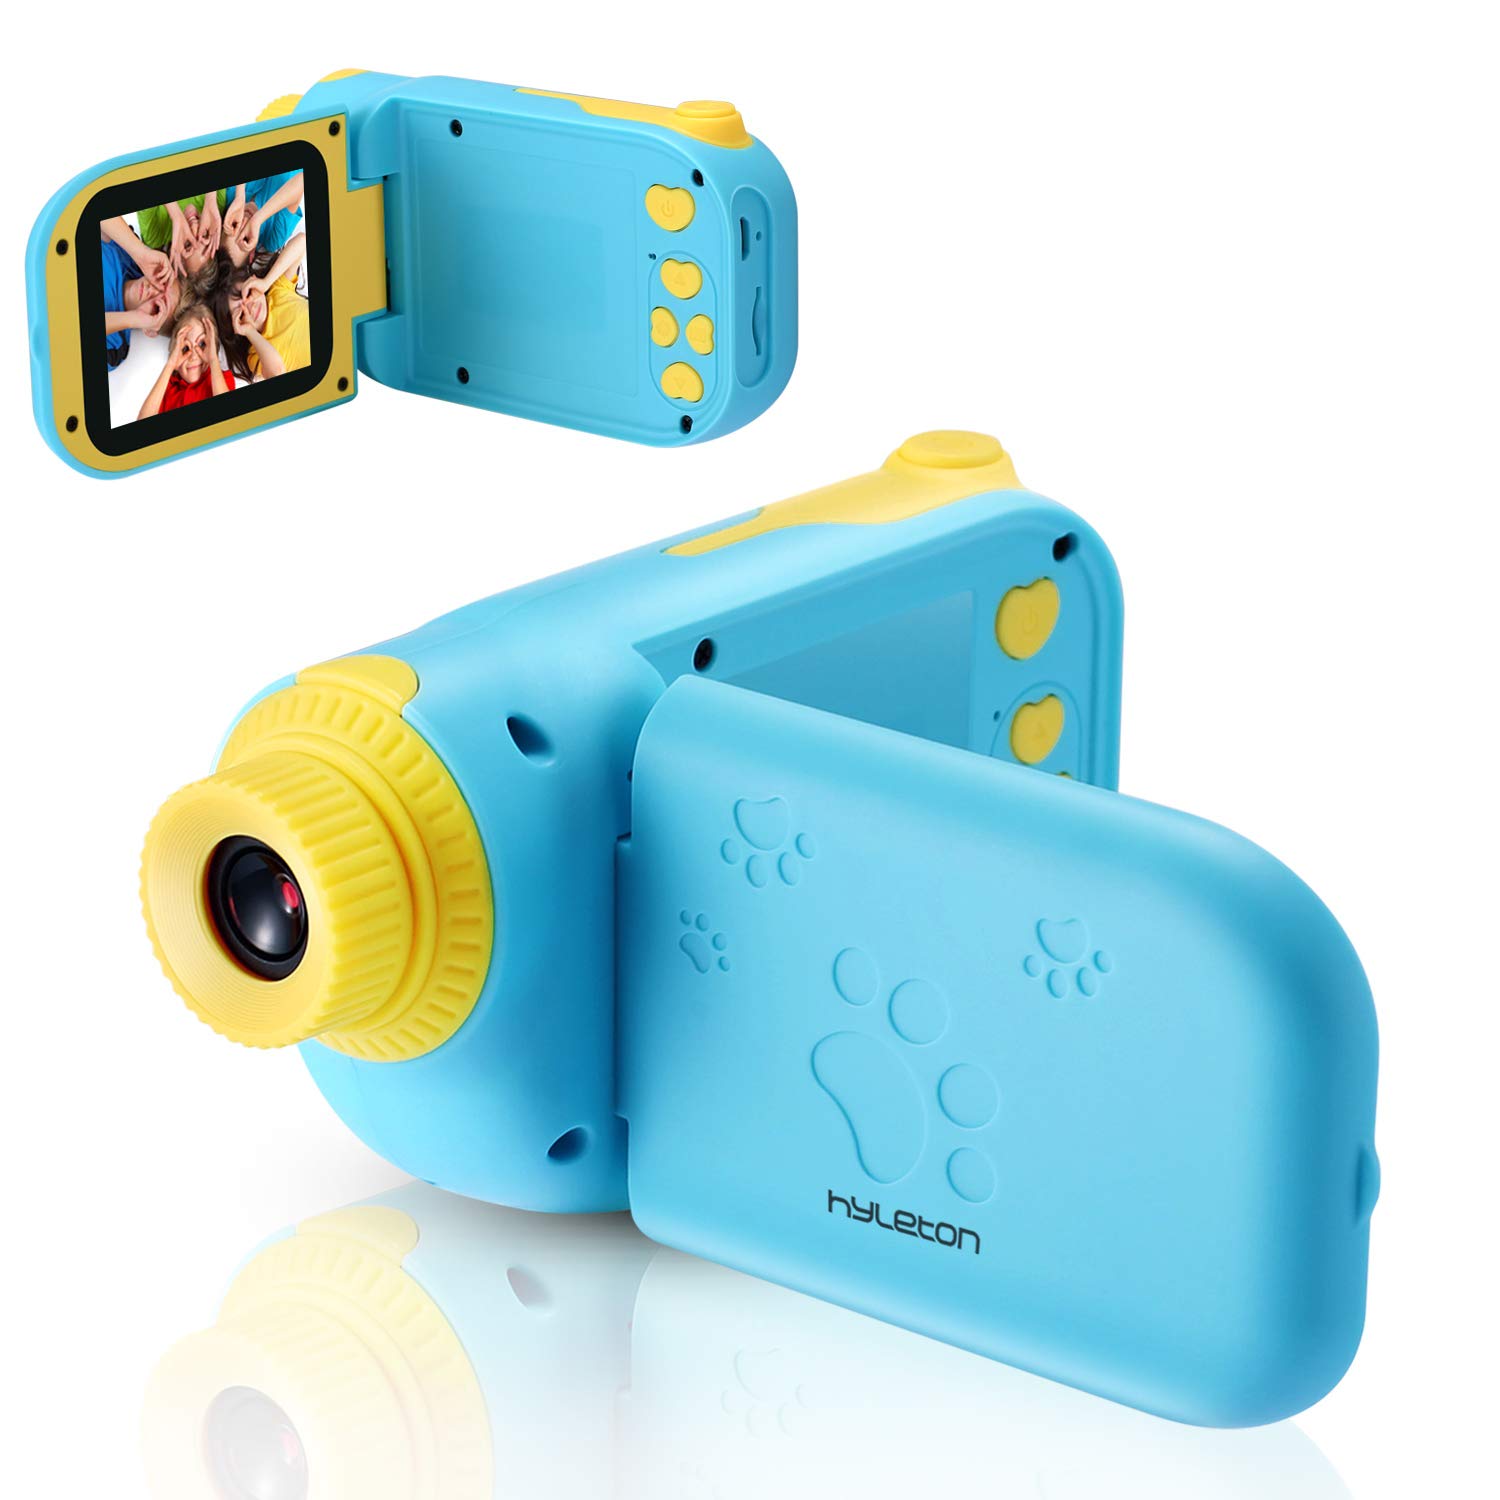 Børn mini videokamera fuld  hd 1080p børn baby digitalkamera selfie tegneseriekamera pædagogisk legetøj med 16gb/32gb kort: Blå / Uden tf-kort